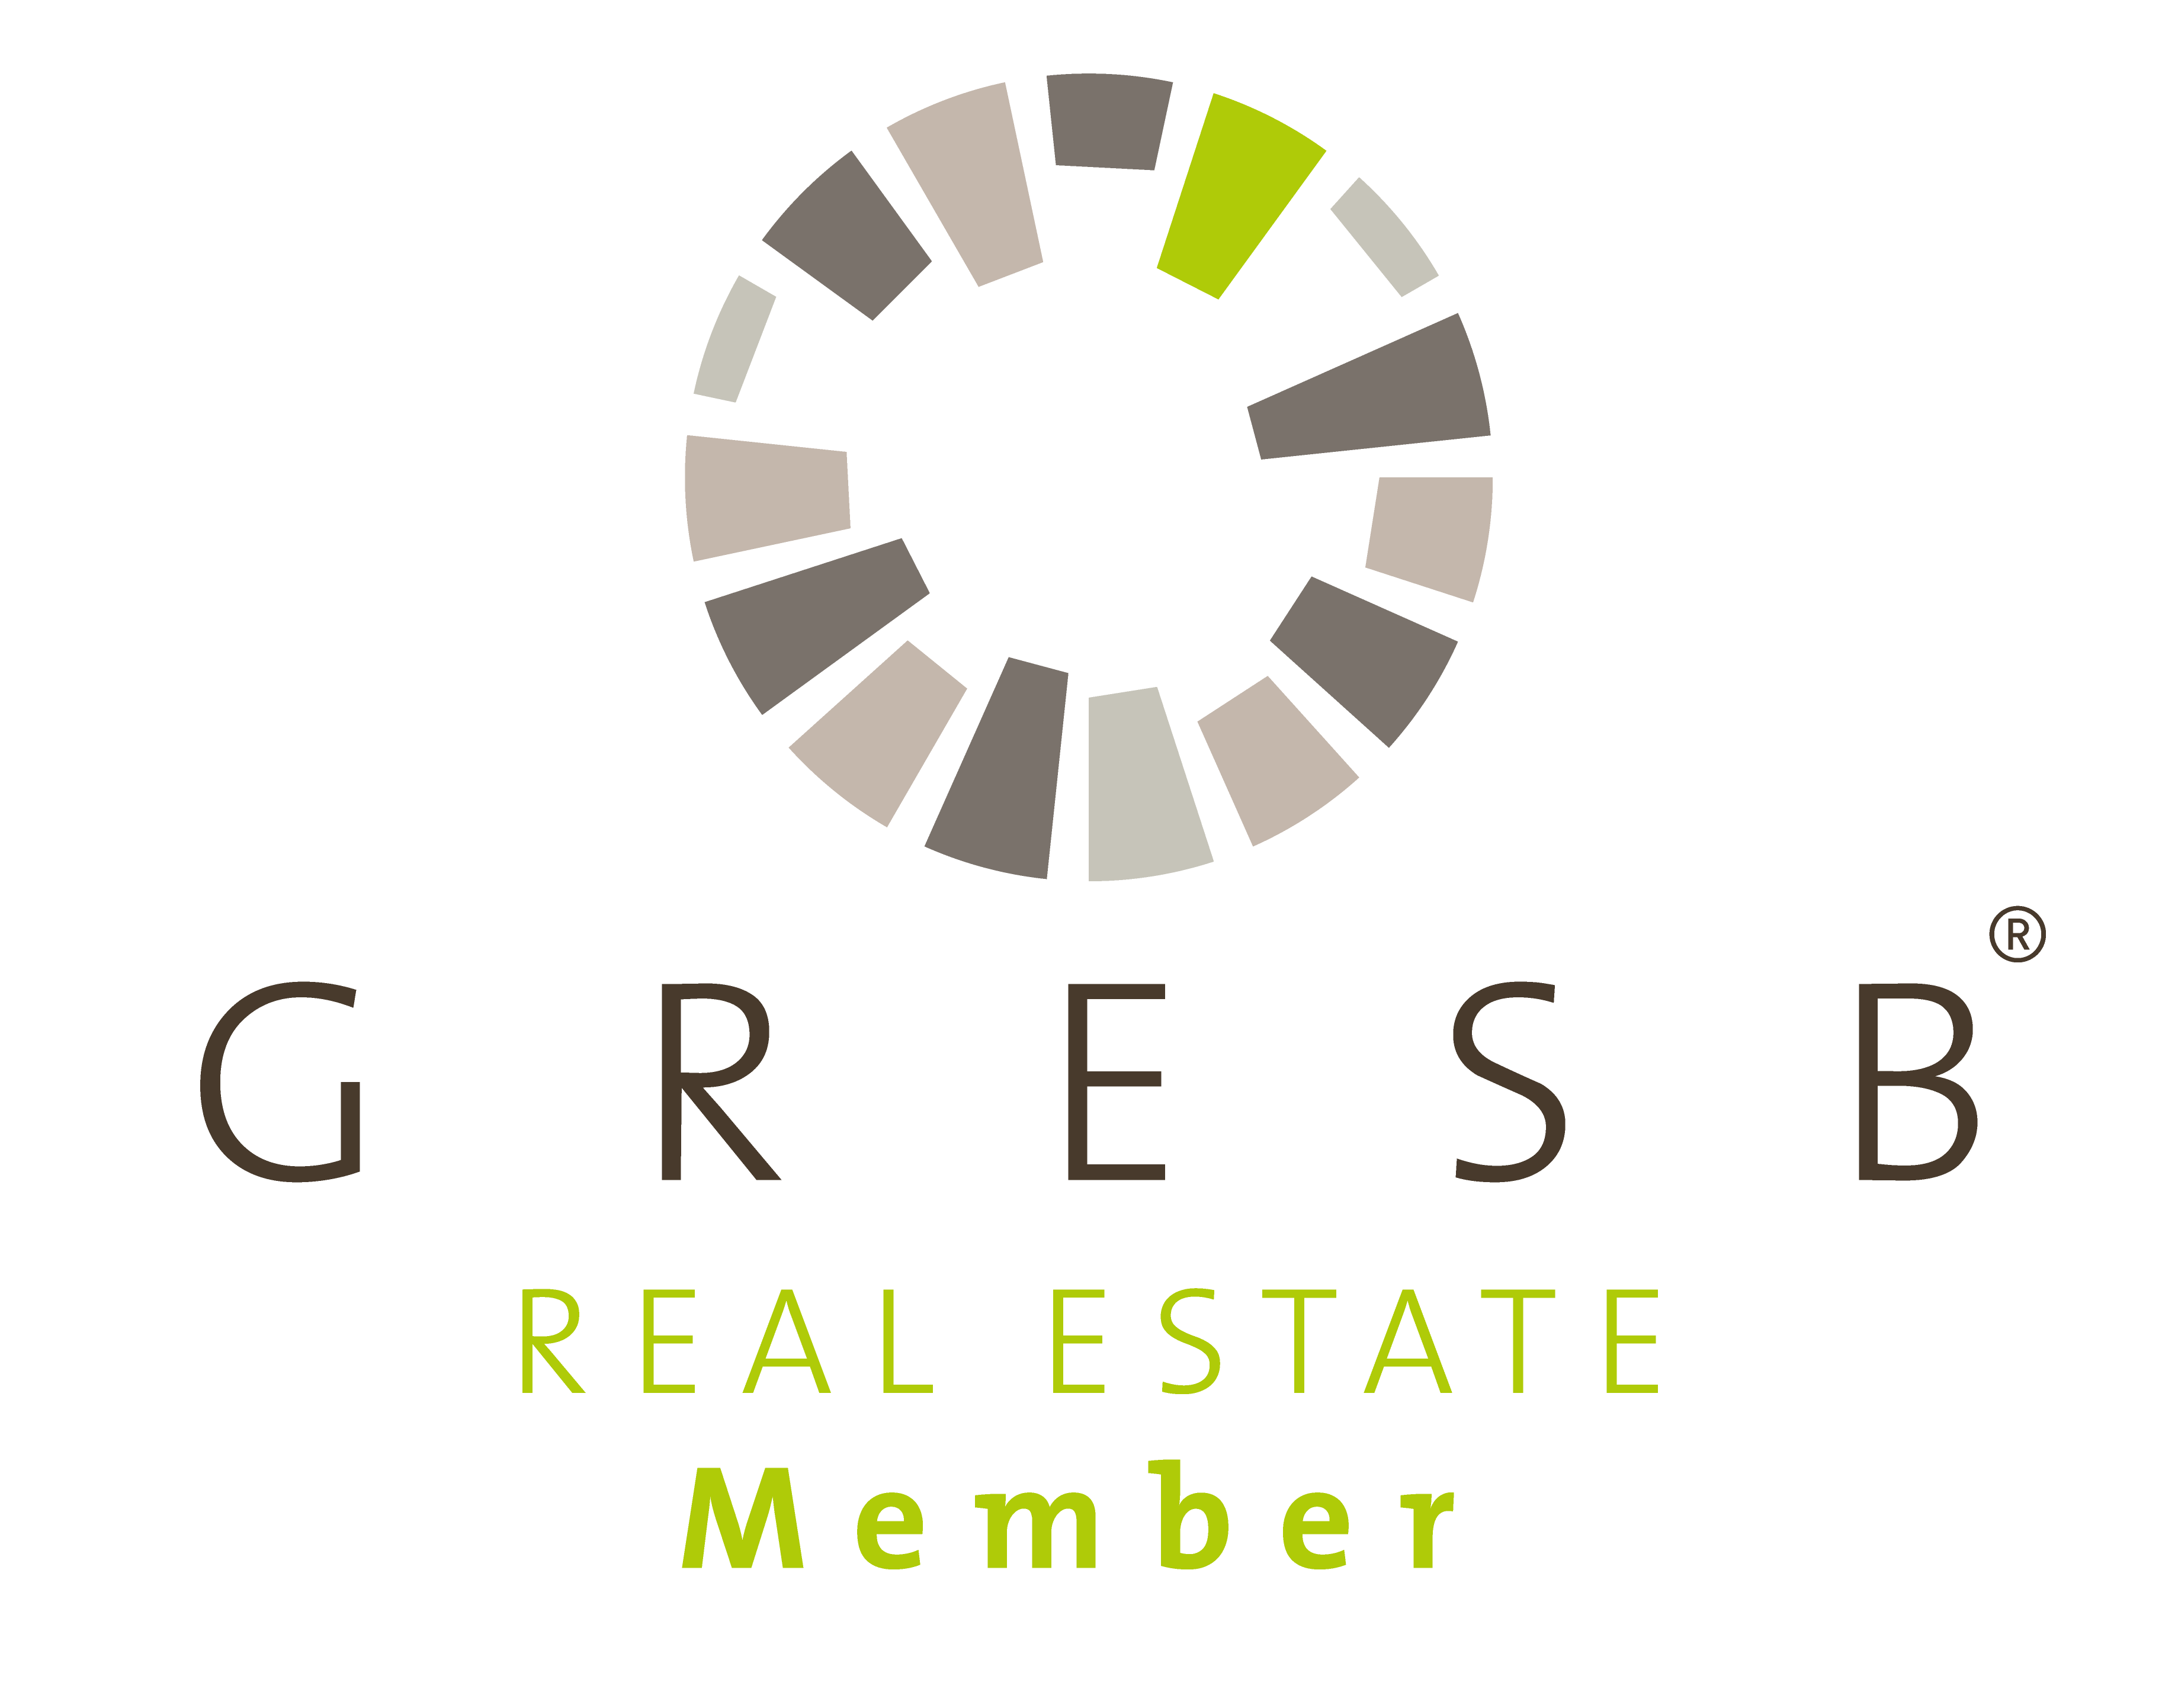 GRESB Logo